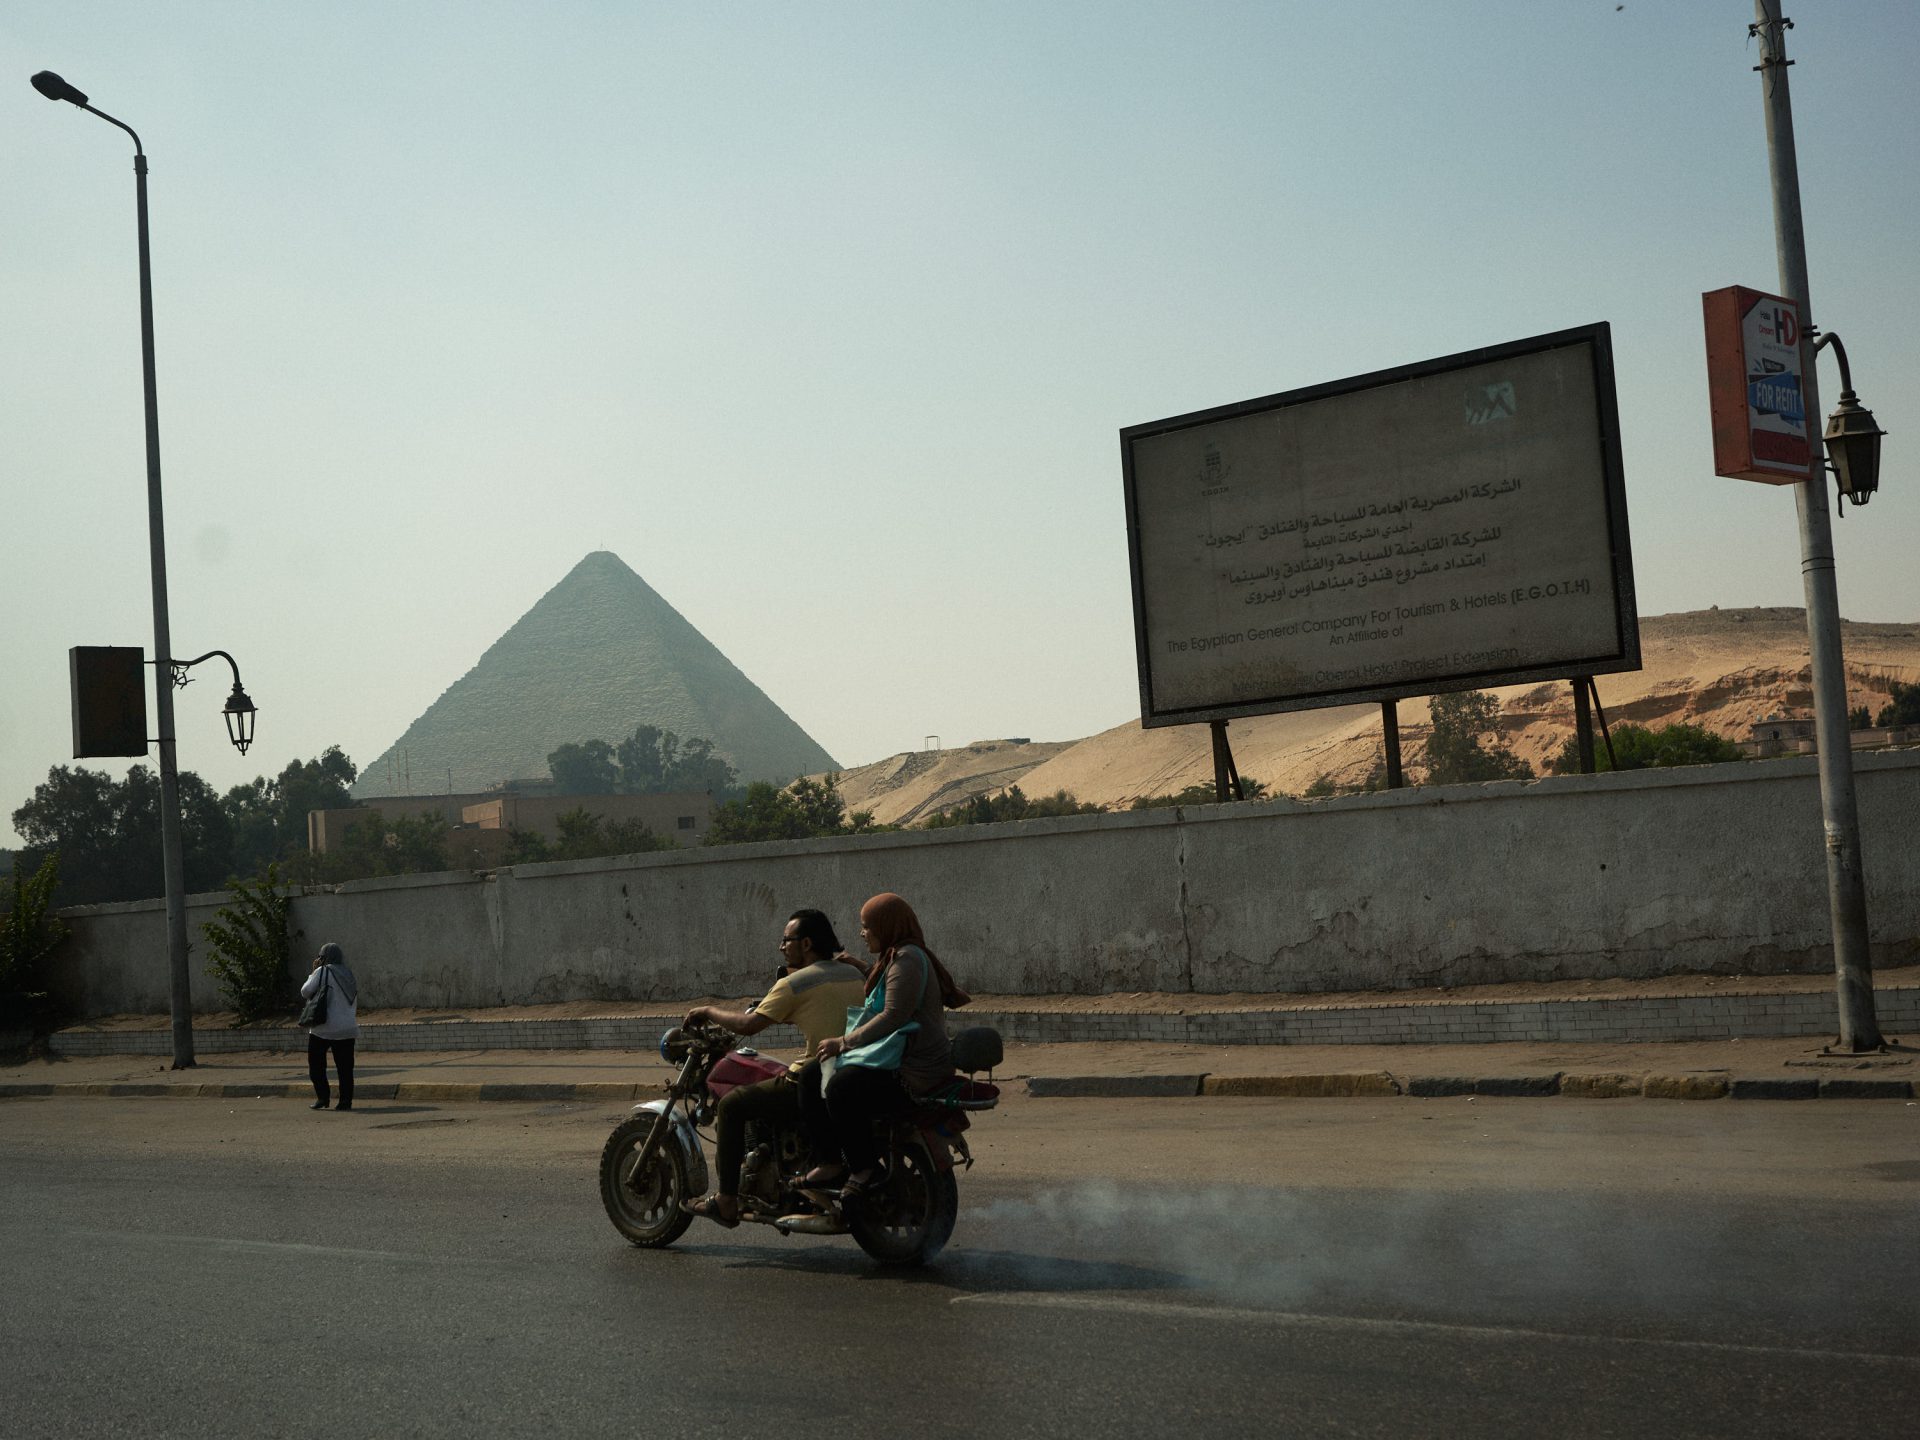 Harrison Boyce Egypt travel photo